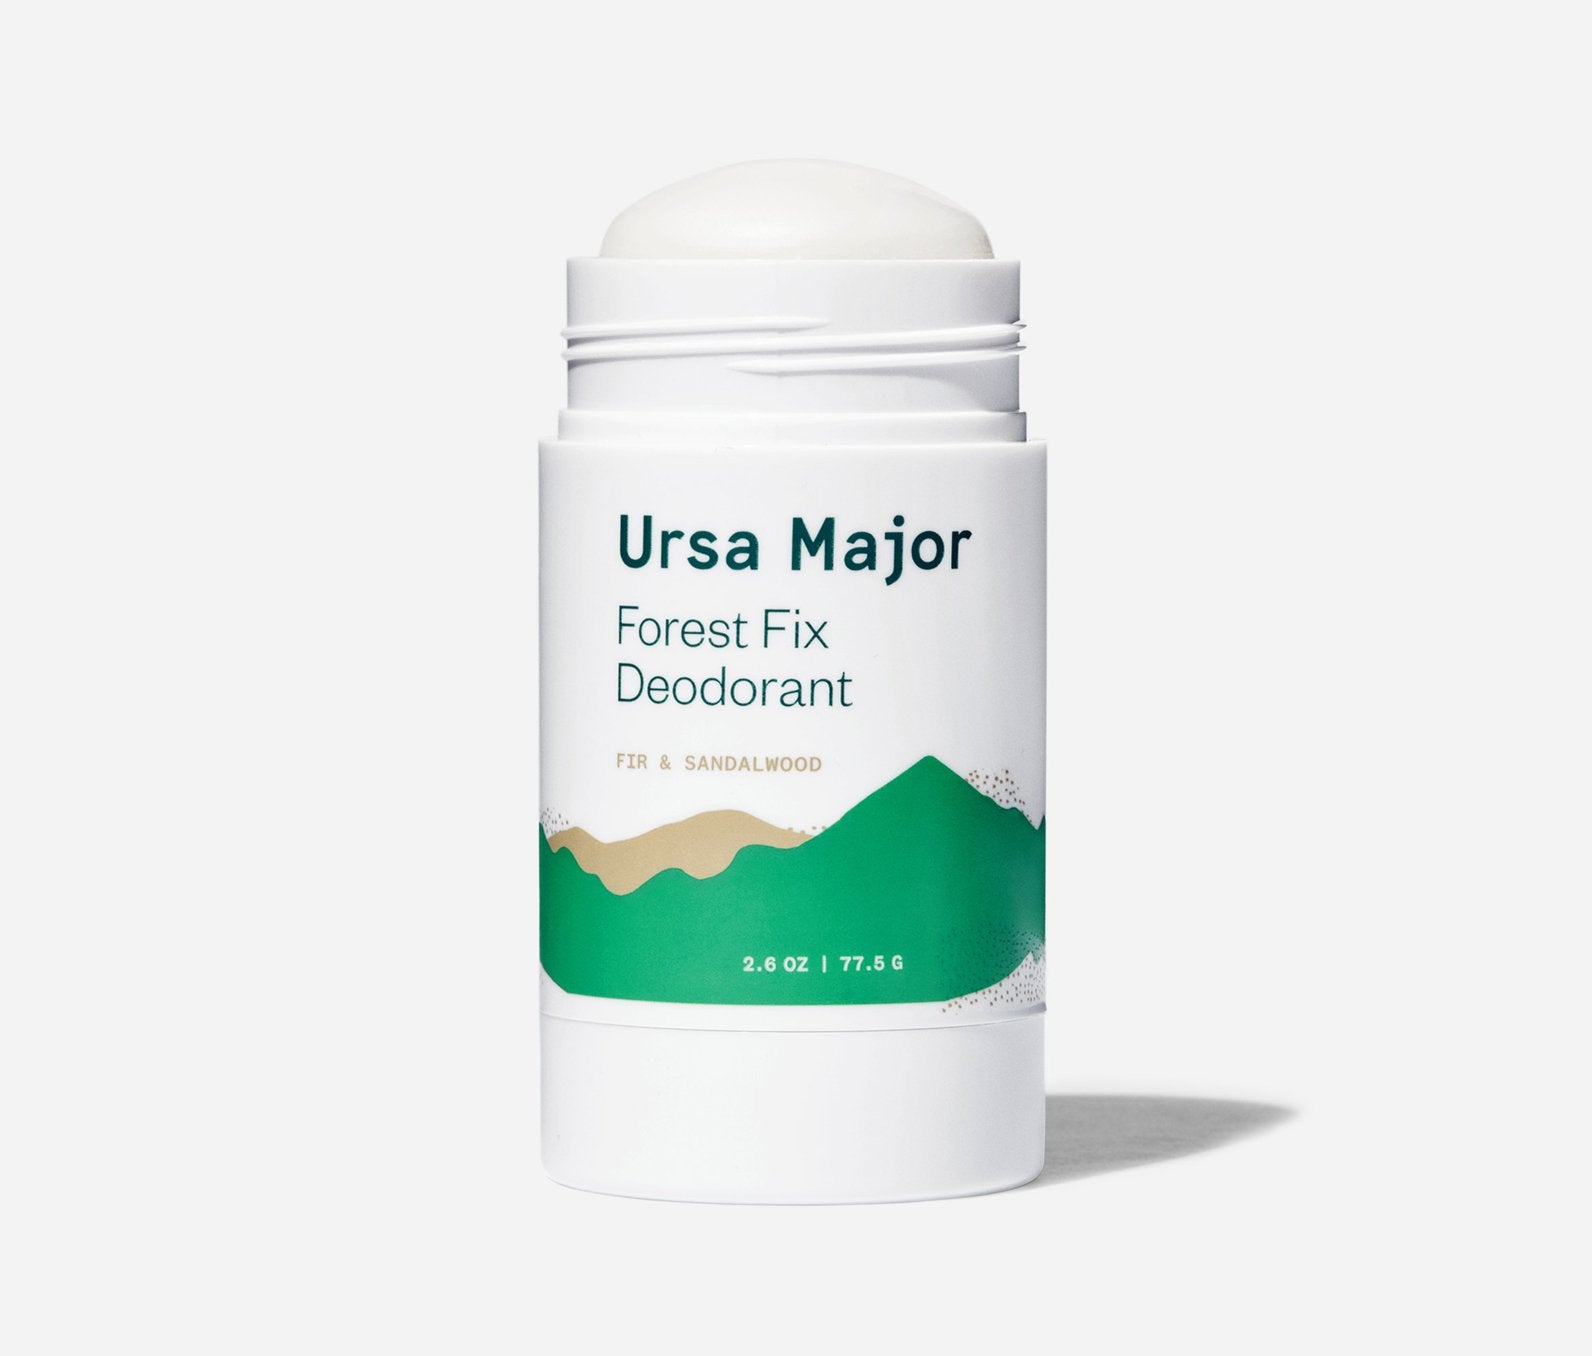 Ursa Major Forest Fix Deodorant